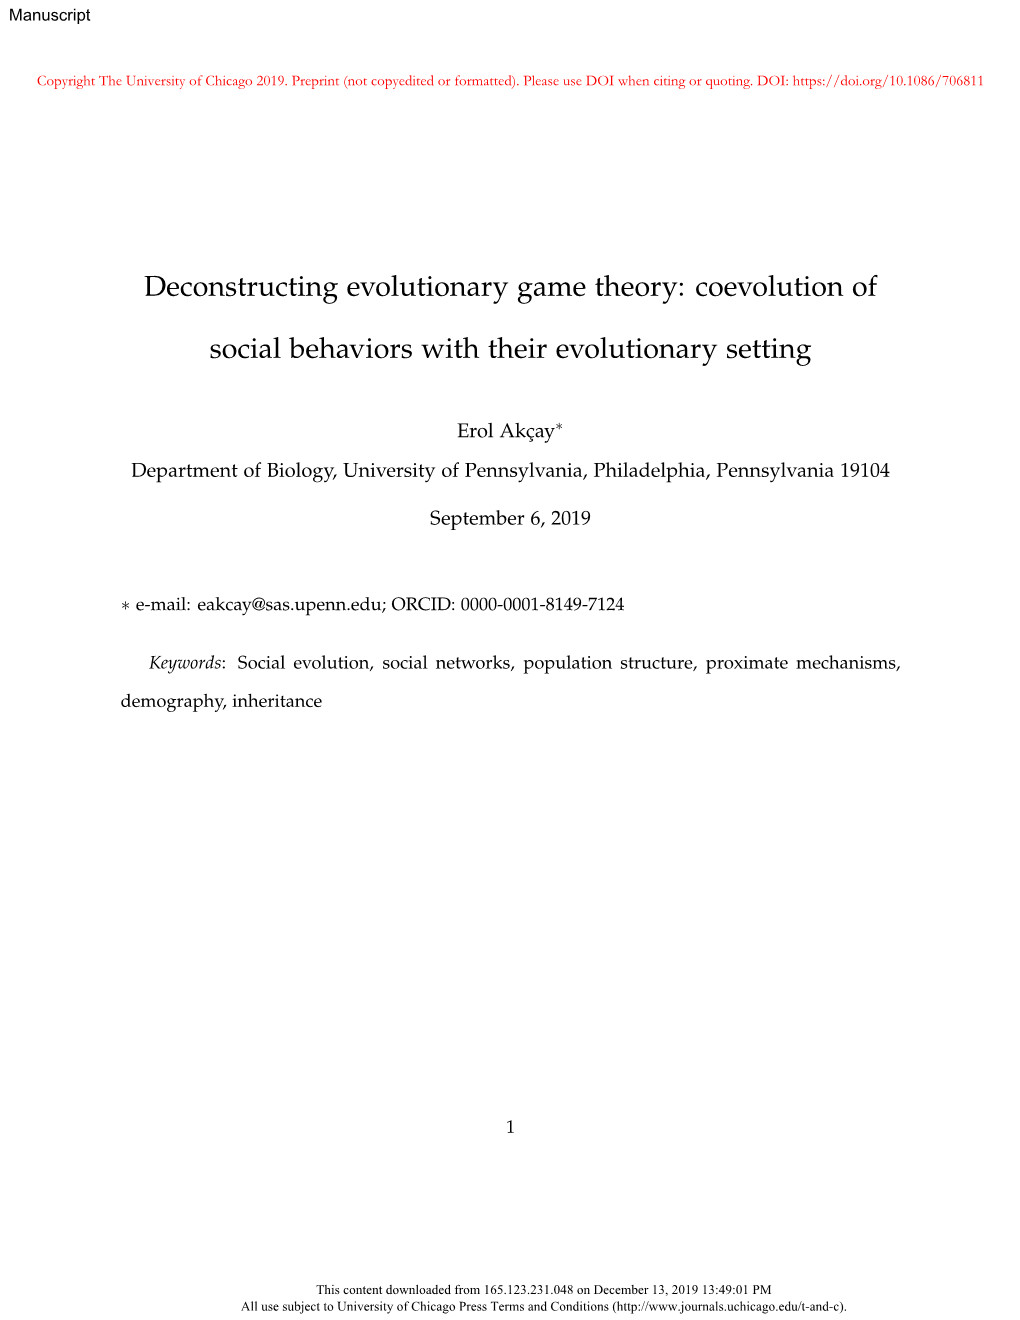 Deconstructing Evolutionary Game Theory: Coevolution Of